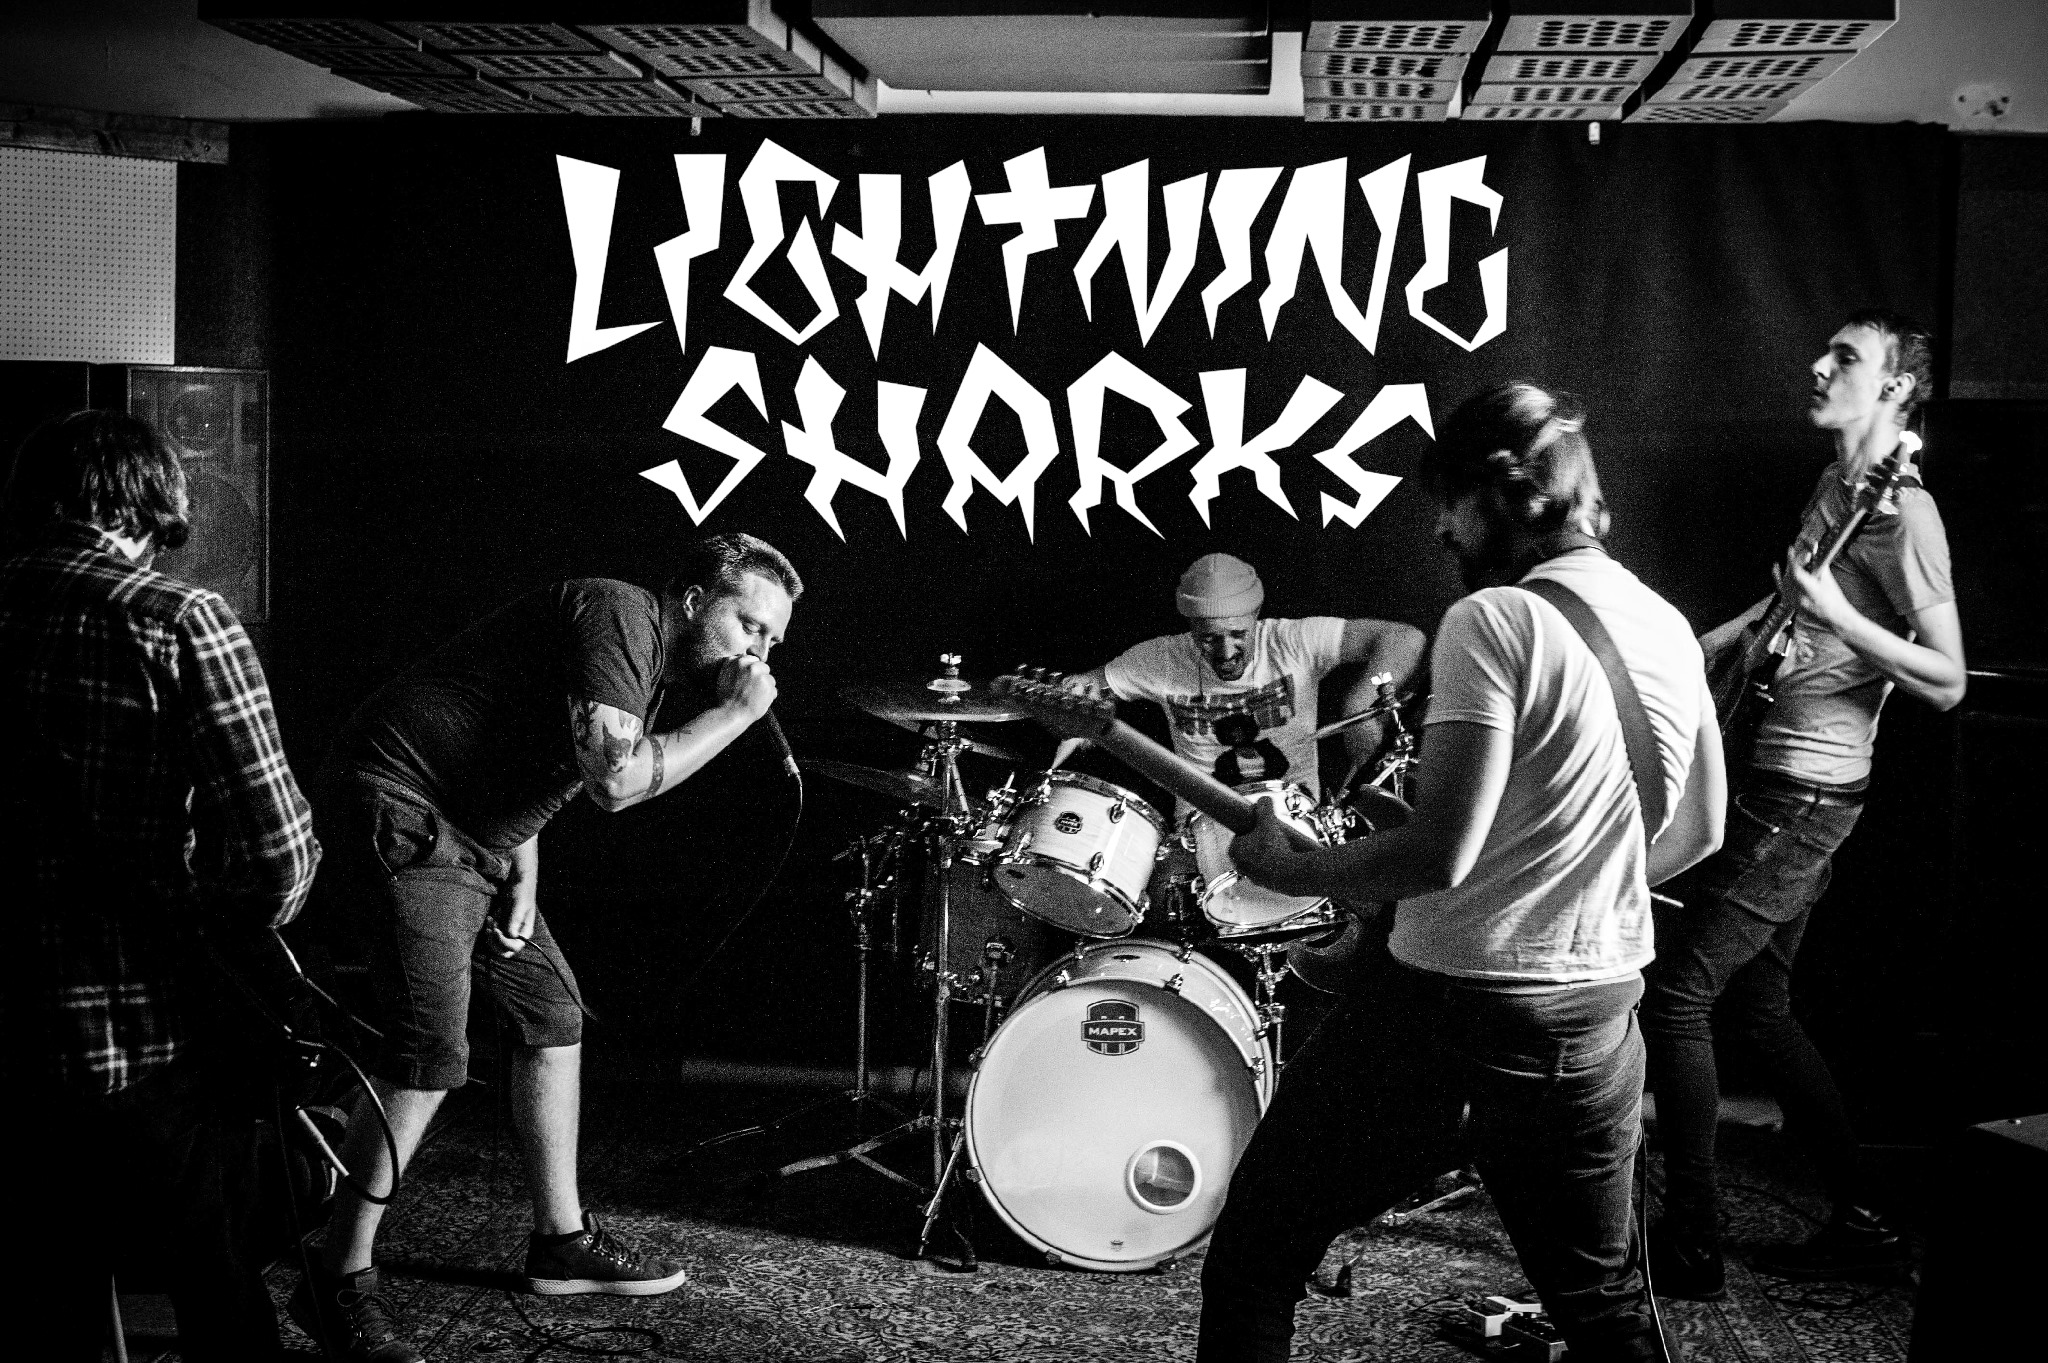 LIGHTNING SHARKS picture